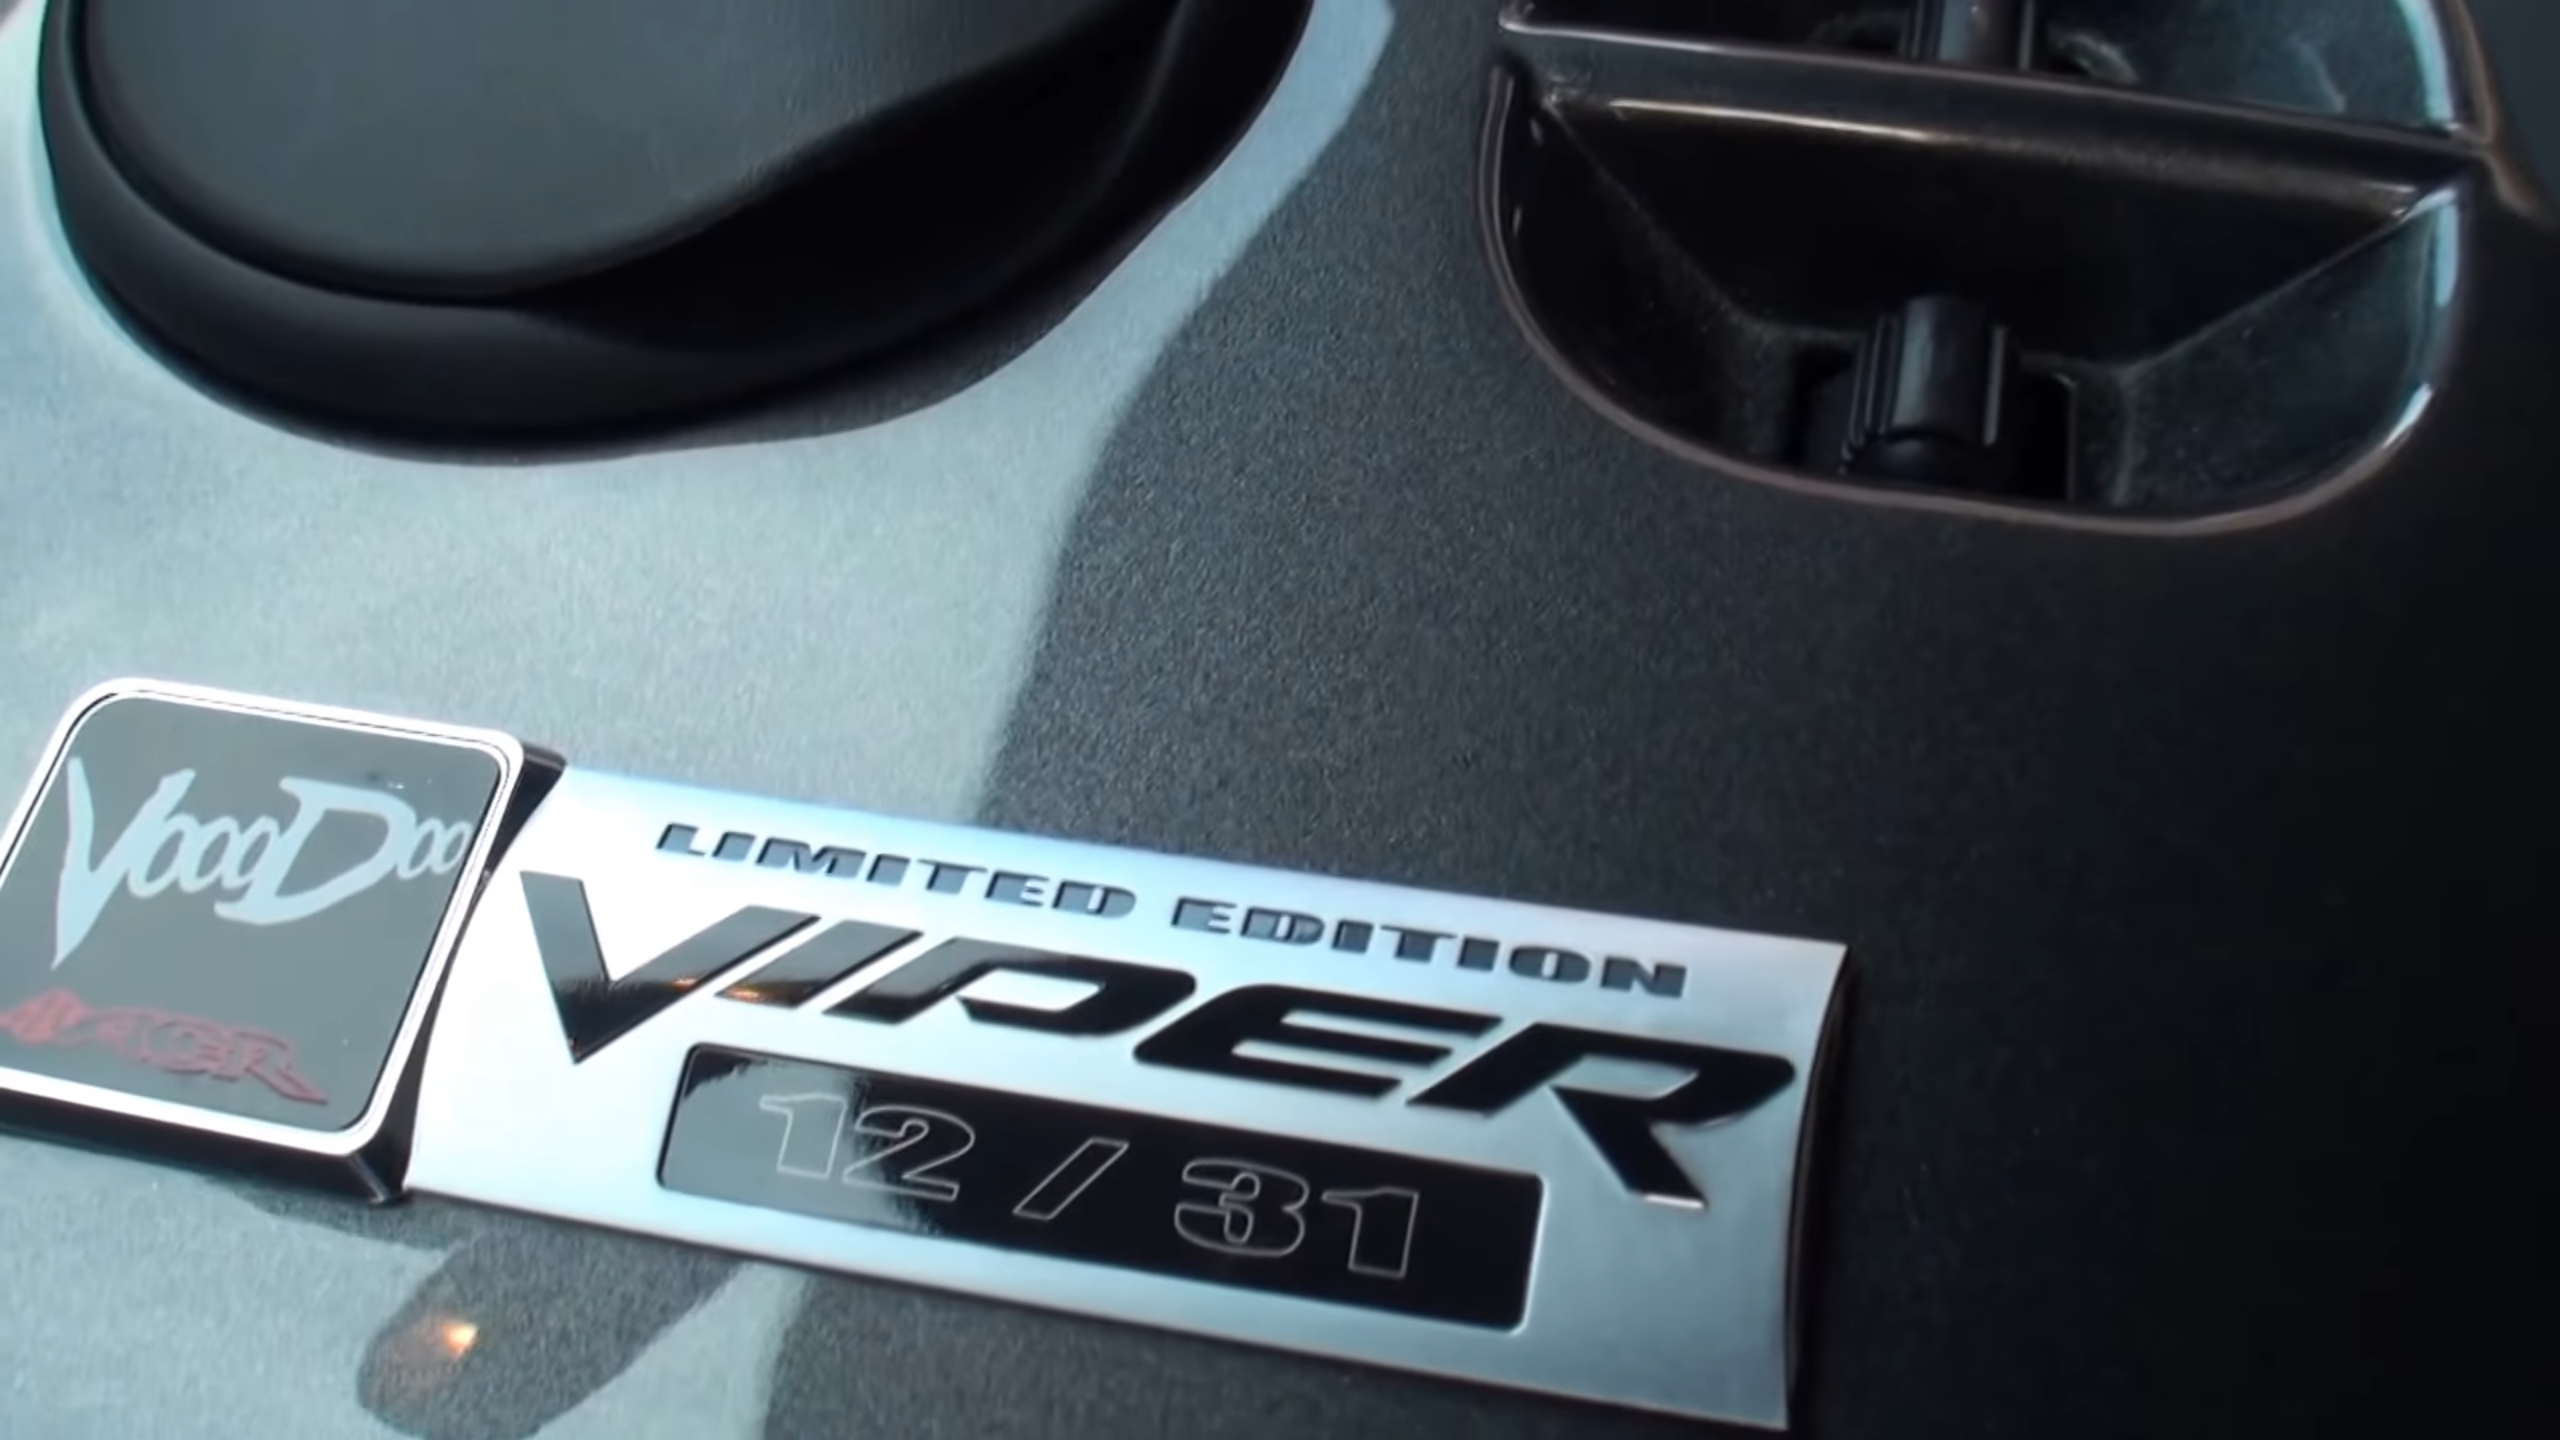 2010 Dodge Viper Voodoo Edition 12 of 31 badge 